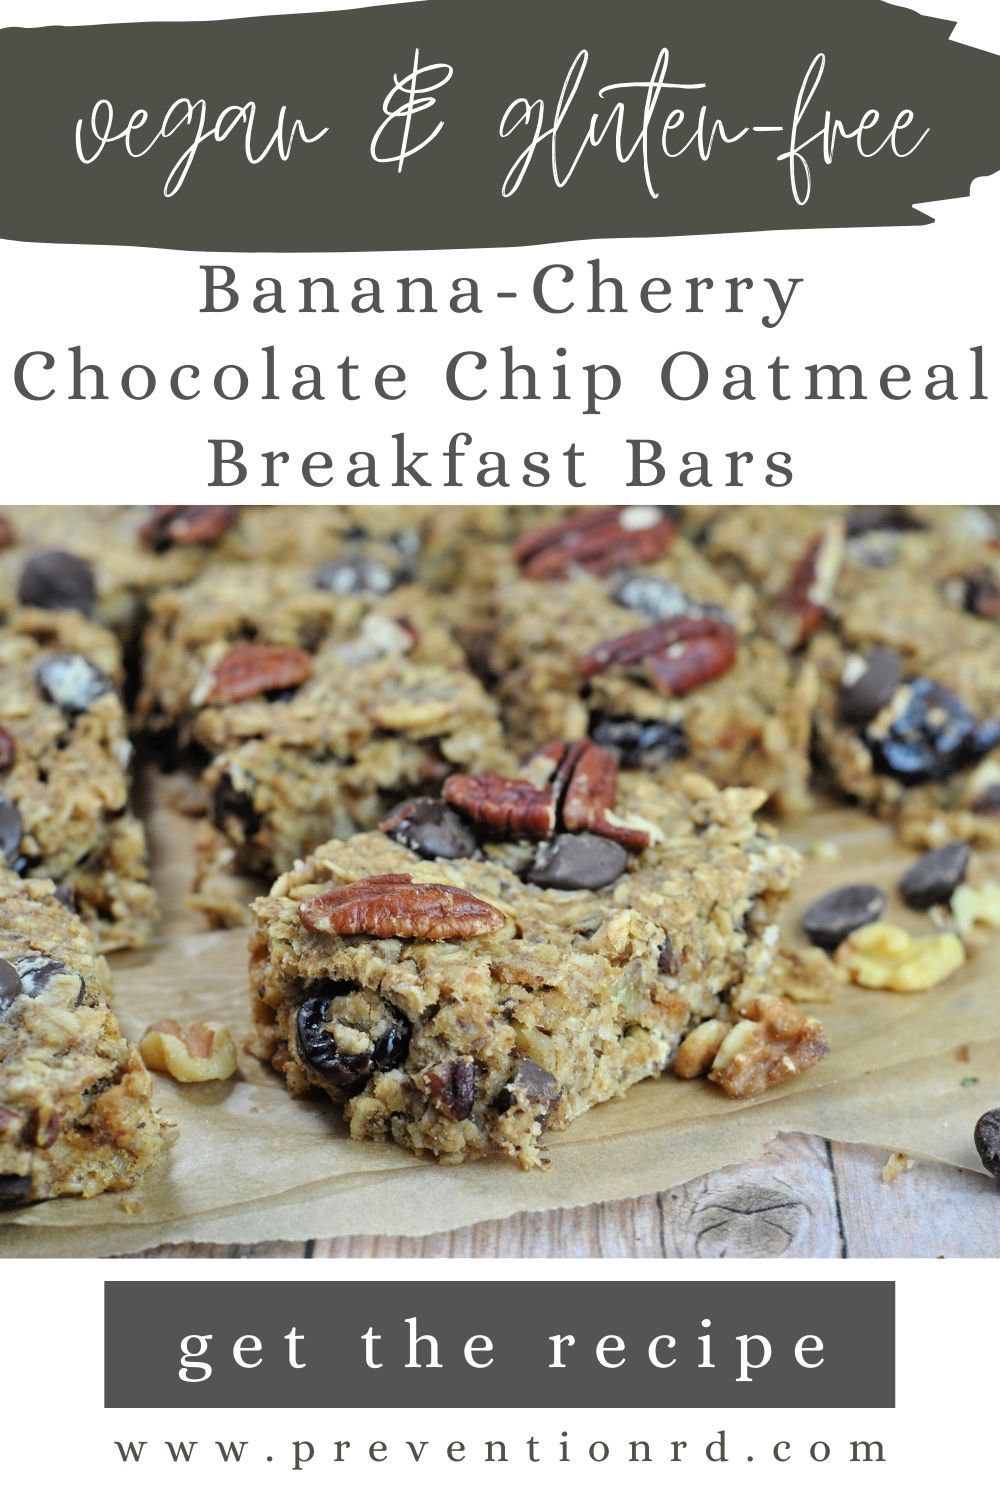 Vegan Banana-Cherry Chocolate Chip Oatmeal Breakfast Bars {Gluten-Free} via @preventionrd